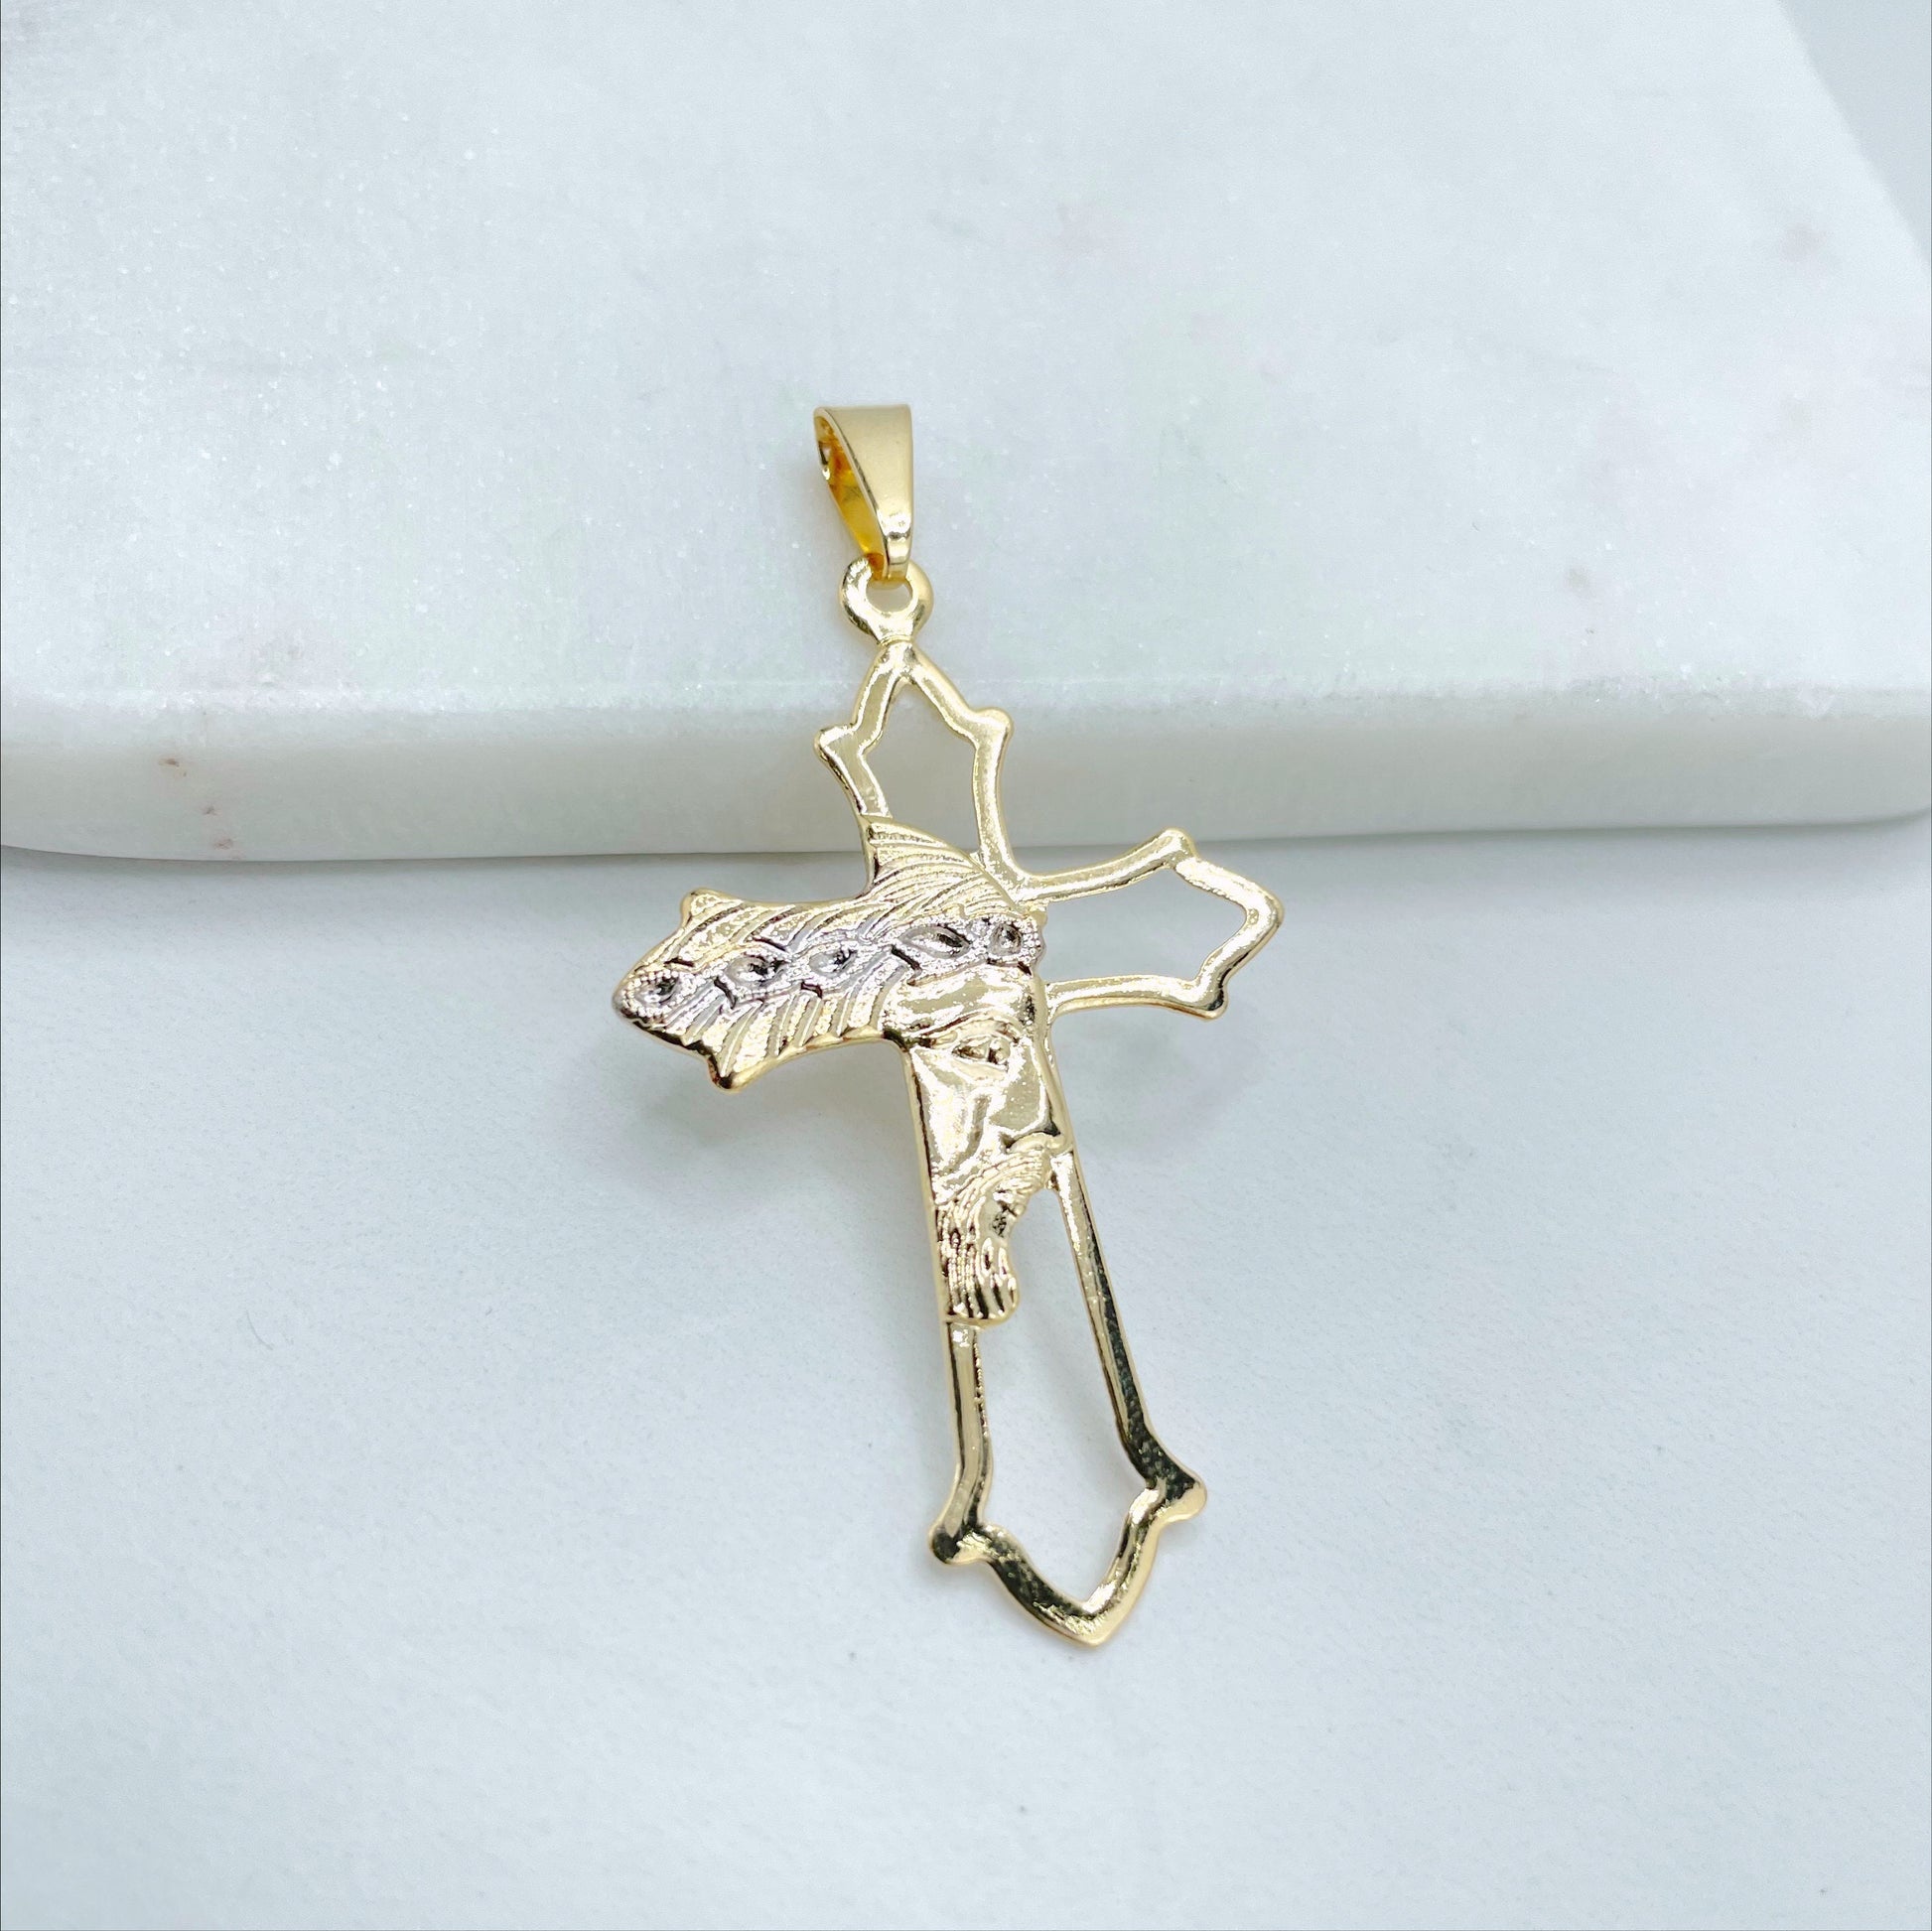 Cross Pendant Lot Jewelry Making 12 pcs Religious Silver Tone 2 Simple